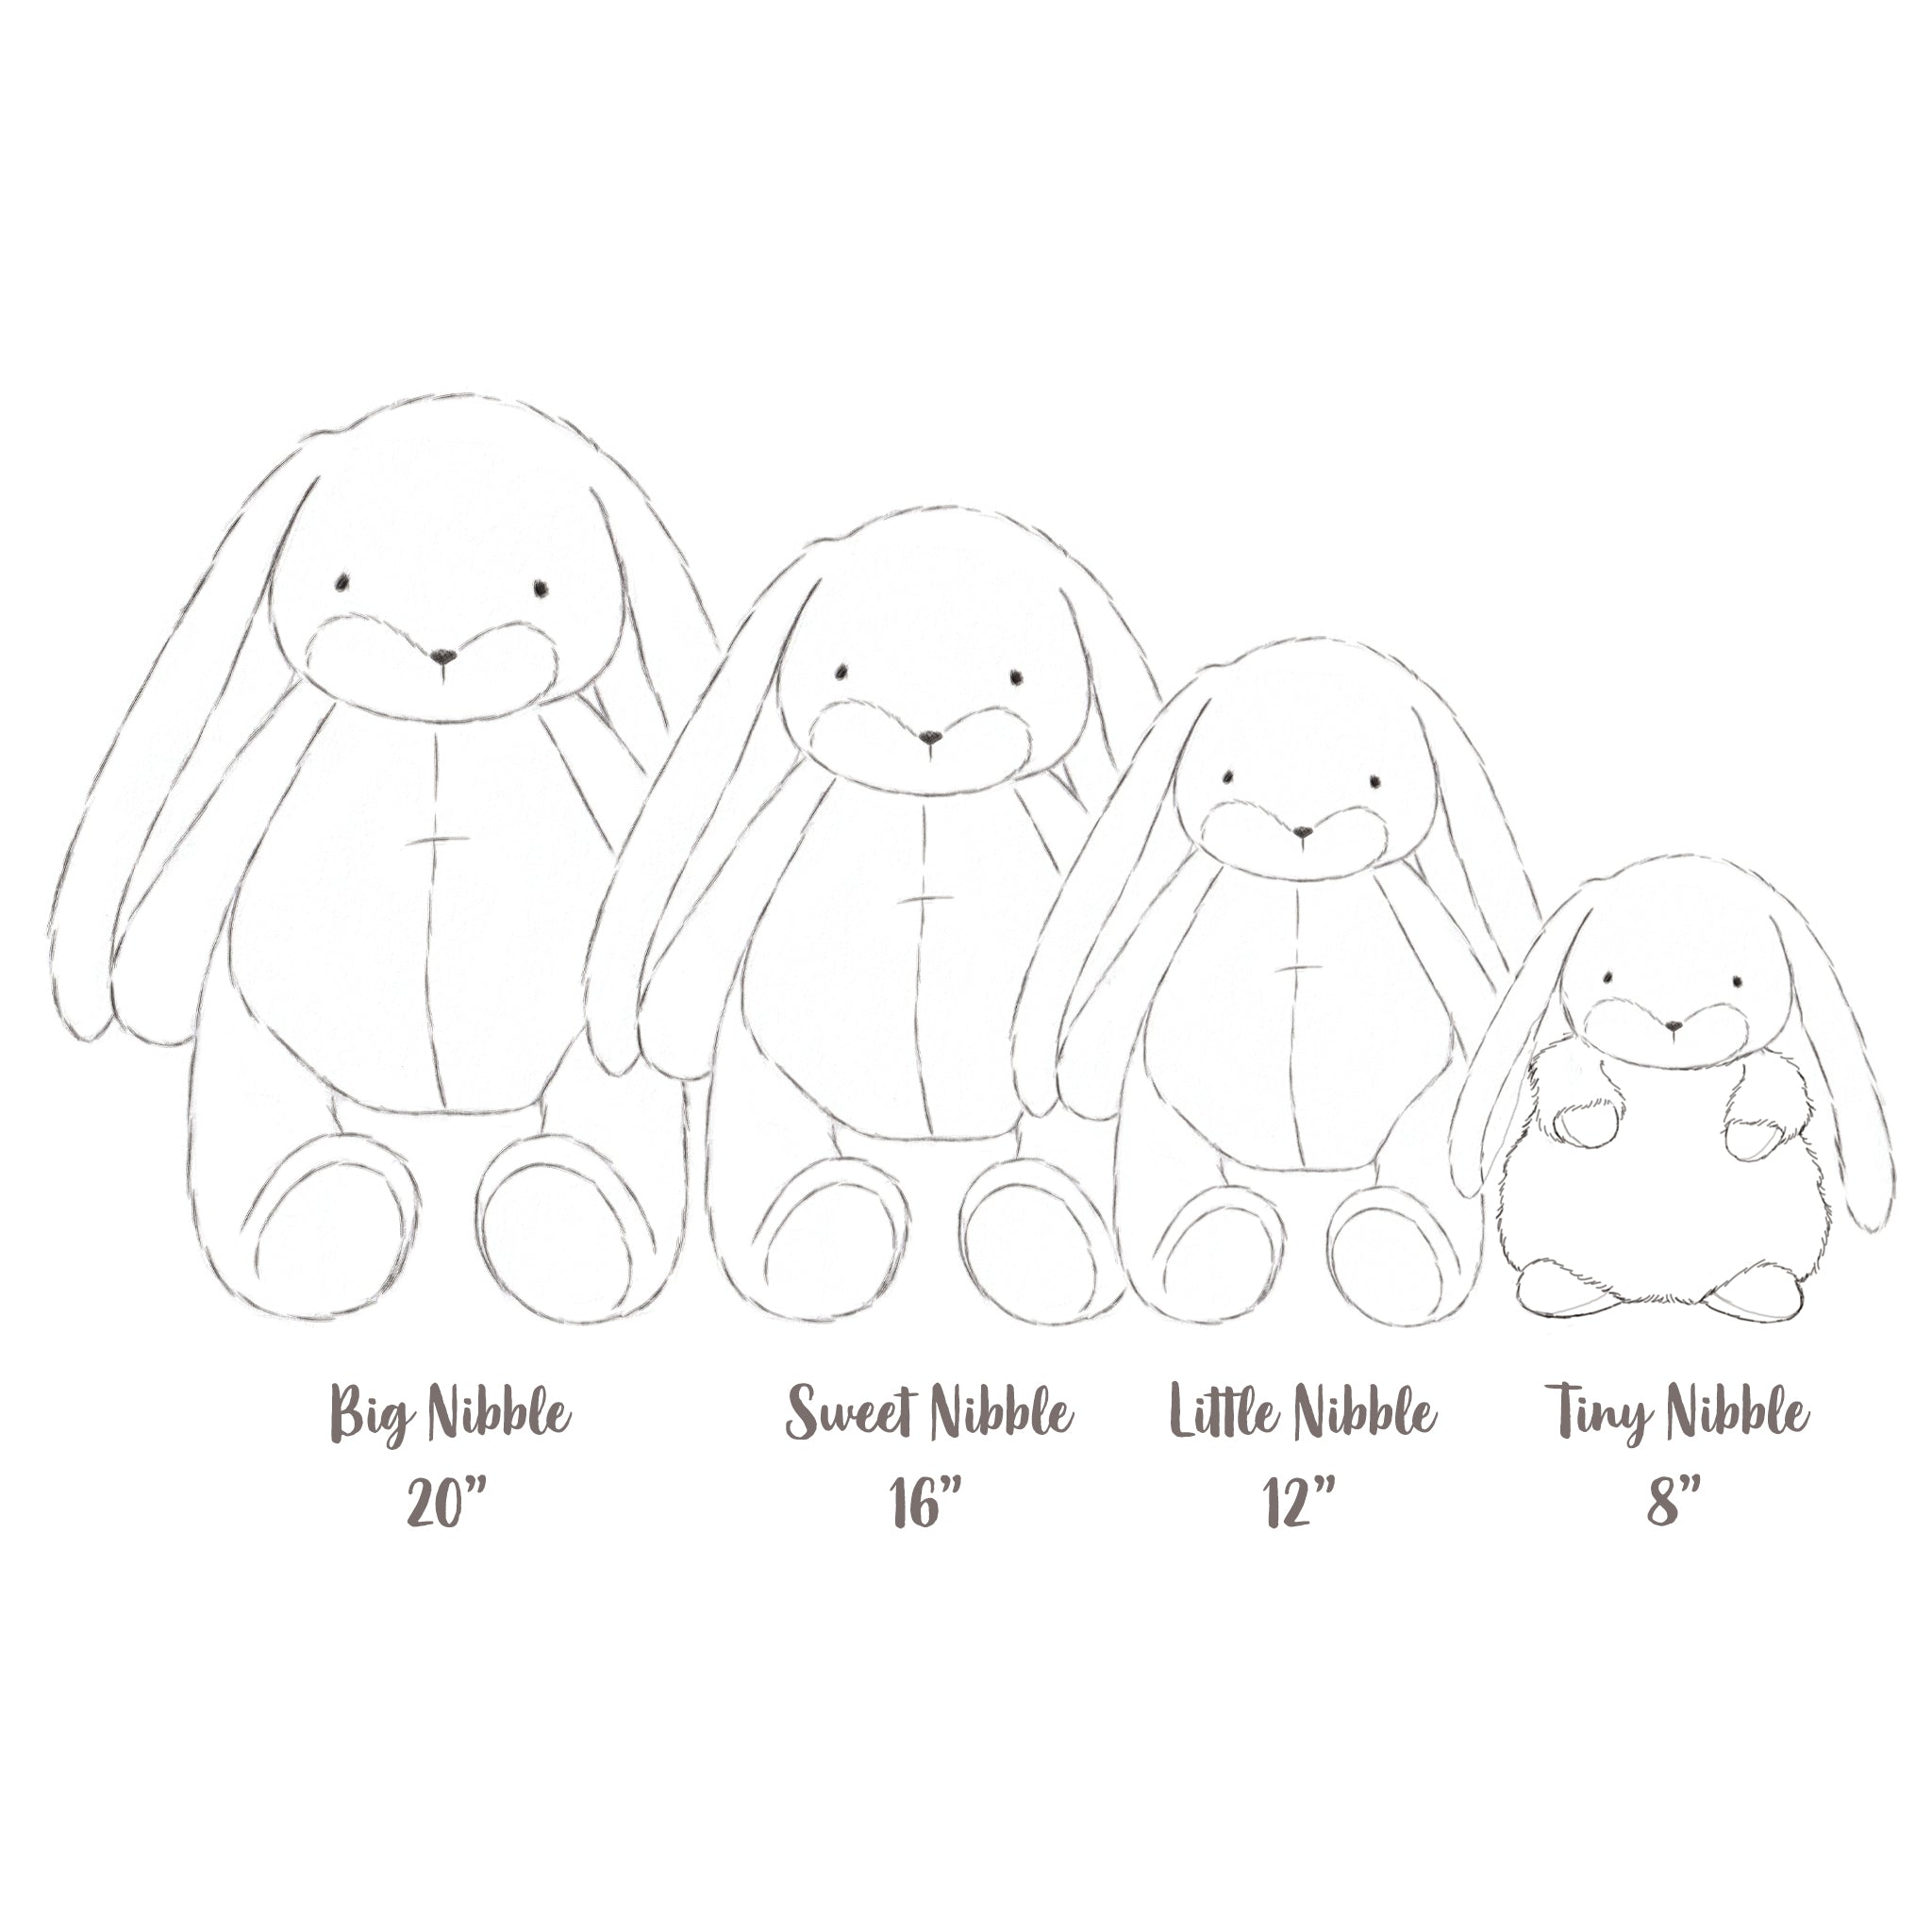 Little Floppy Nibble 12" Bunny - Lavender Lustre-Stuffed Animal-SKU: 104387 - Bunnies By The Bay